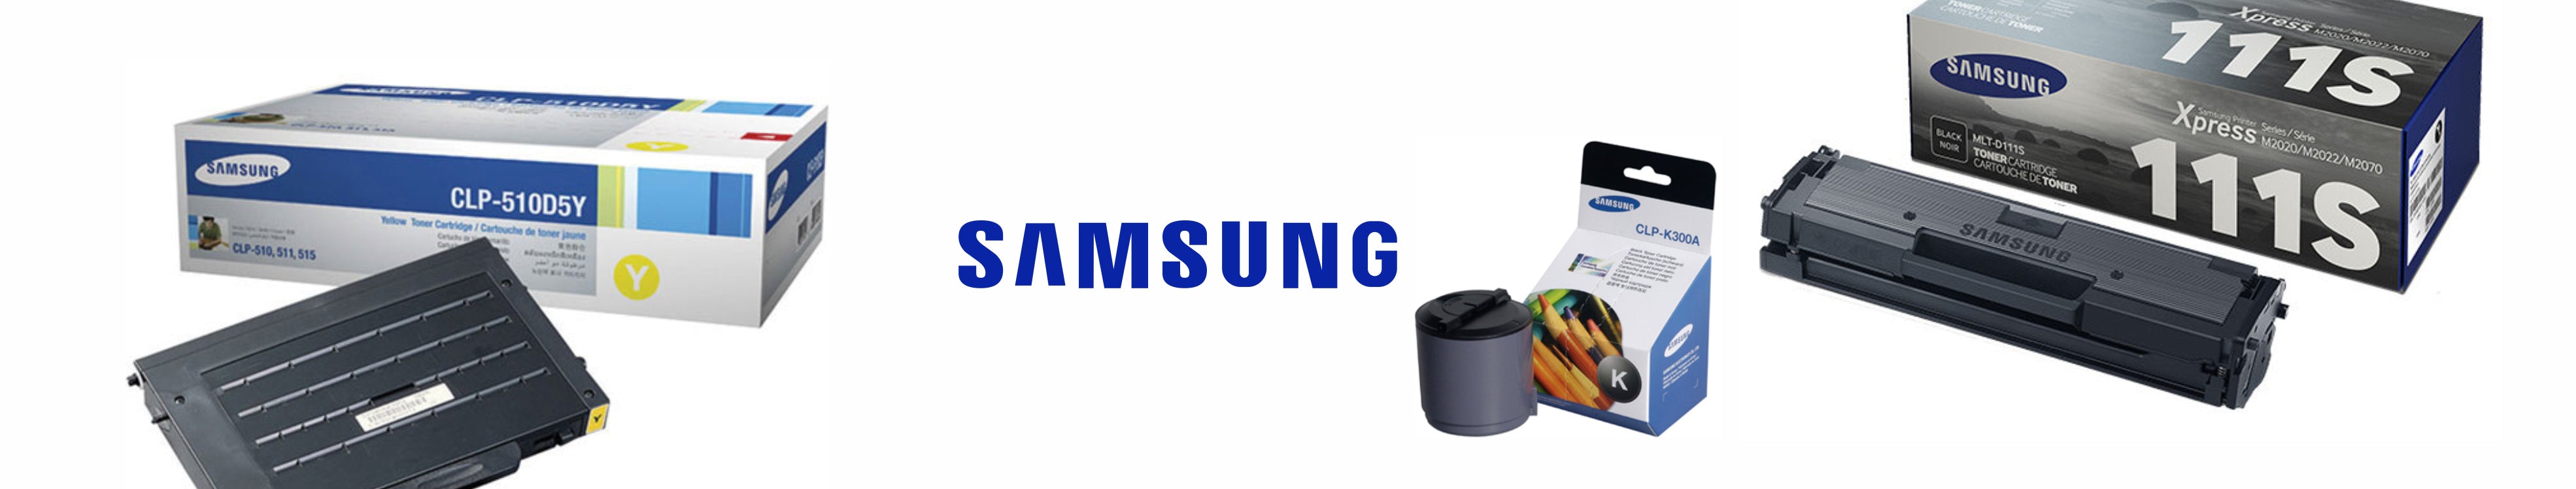 Samsung Toner Cartridges